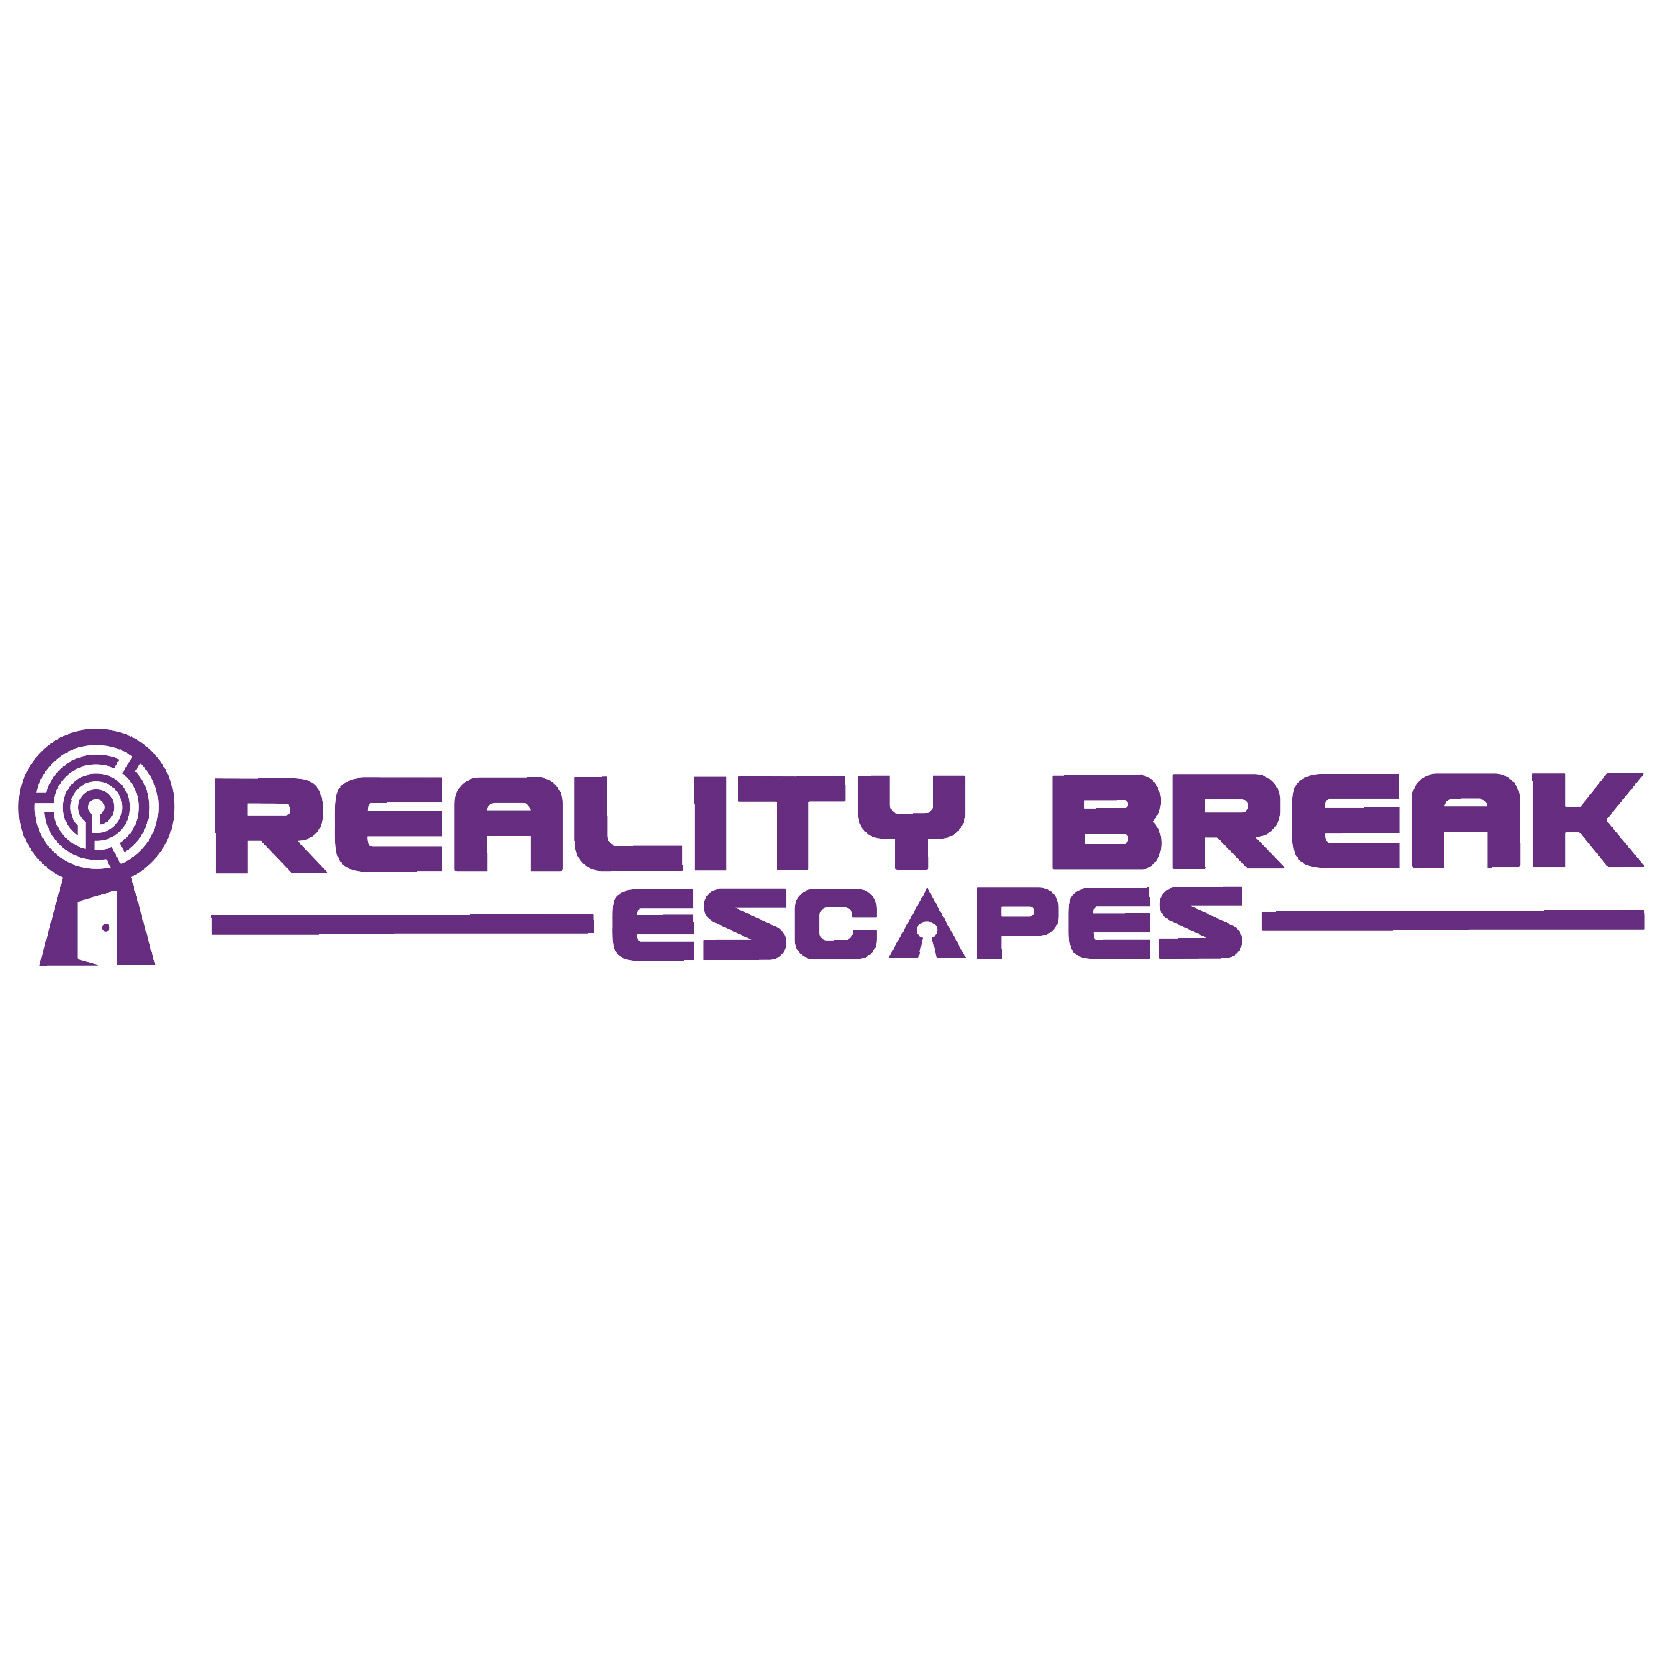 Reality Break Escapes